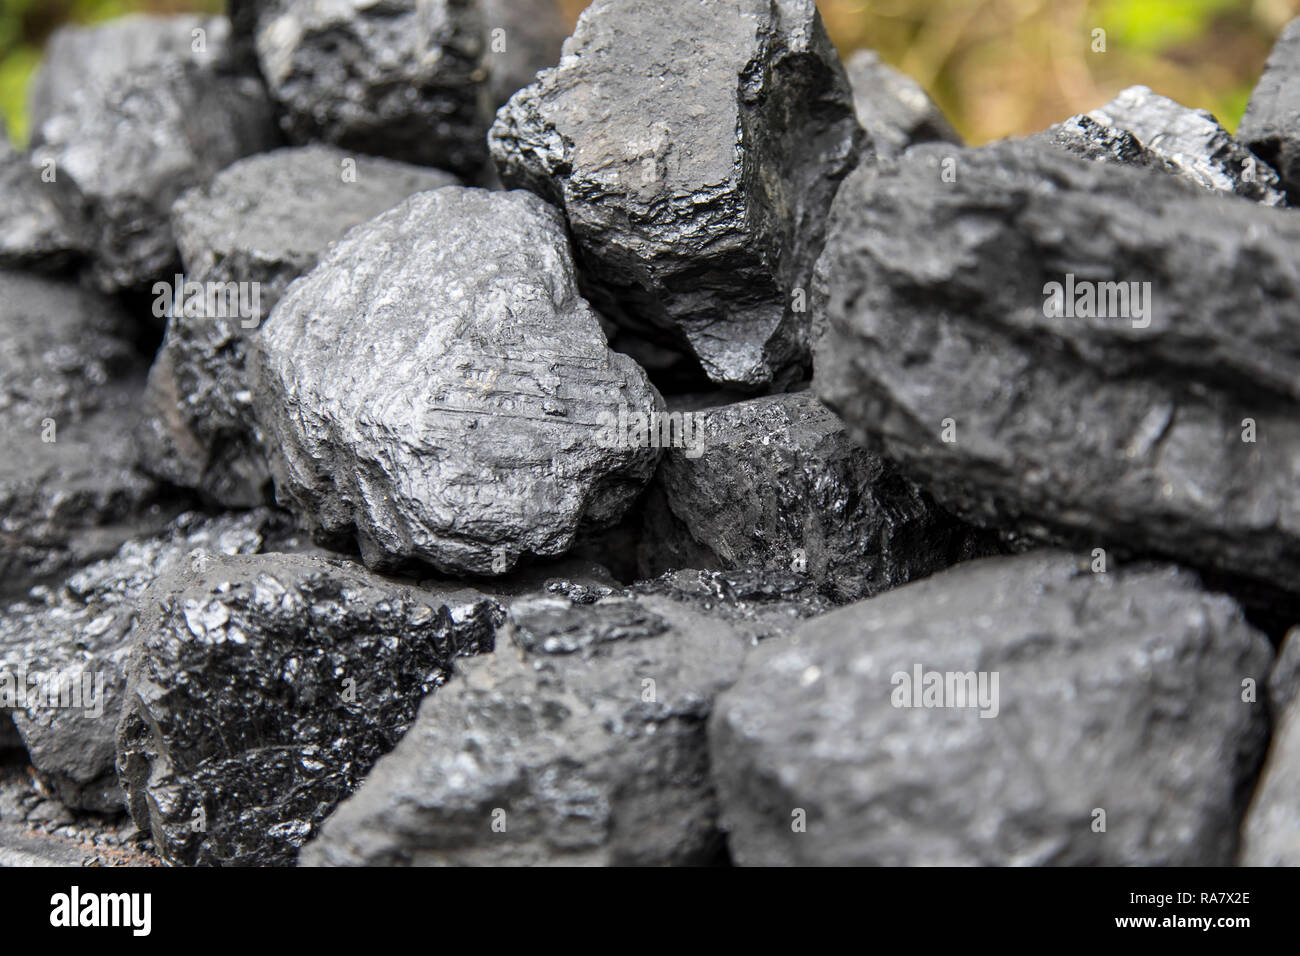 Steinkohle Stücke, Kohle aus dem Ruhrgebiet Bergbau, Bergwerk Prosper Haniel in Bottrop, Stockfoto